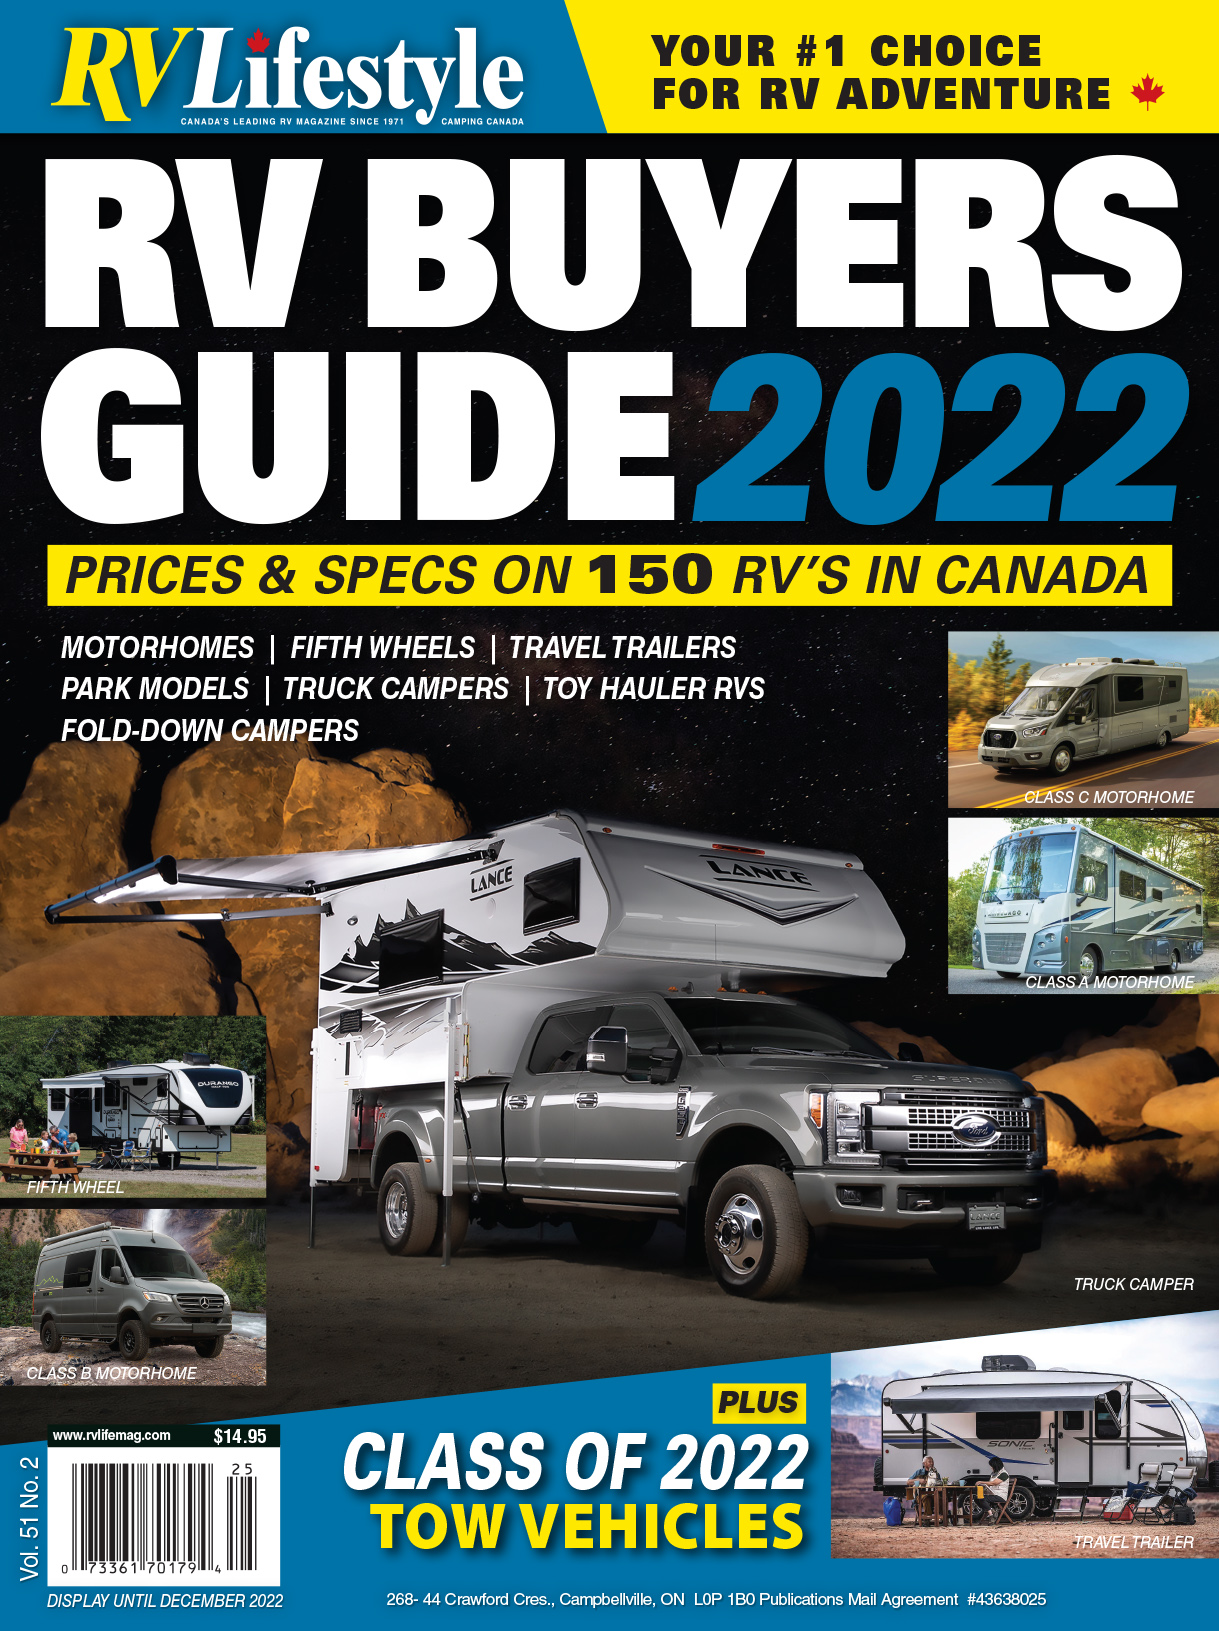 RV Lifestyle 51-2: RV Buyer's Guide 2022